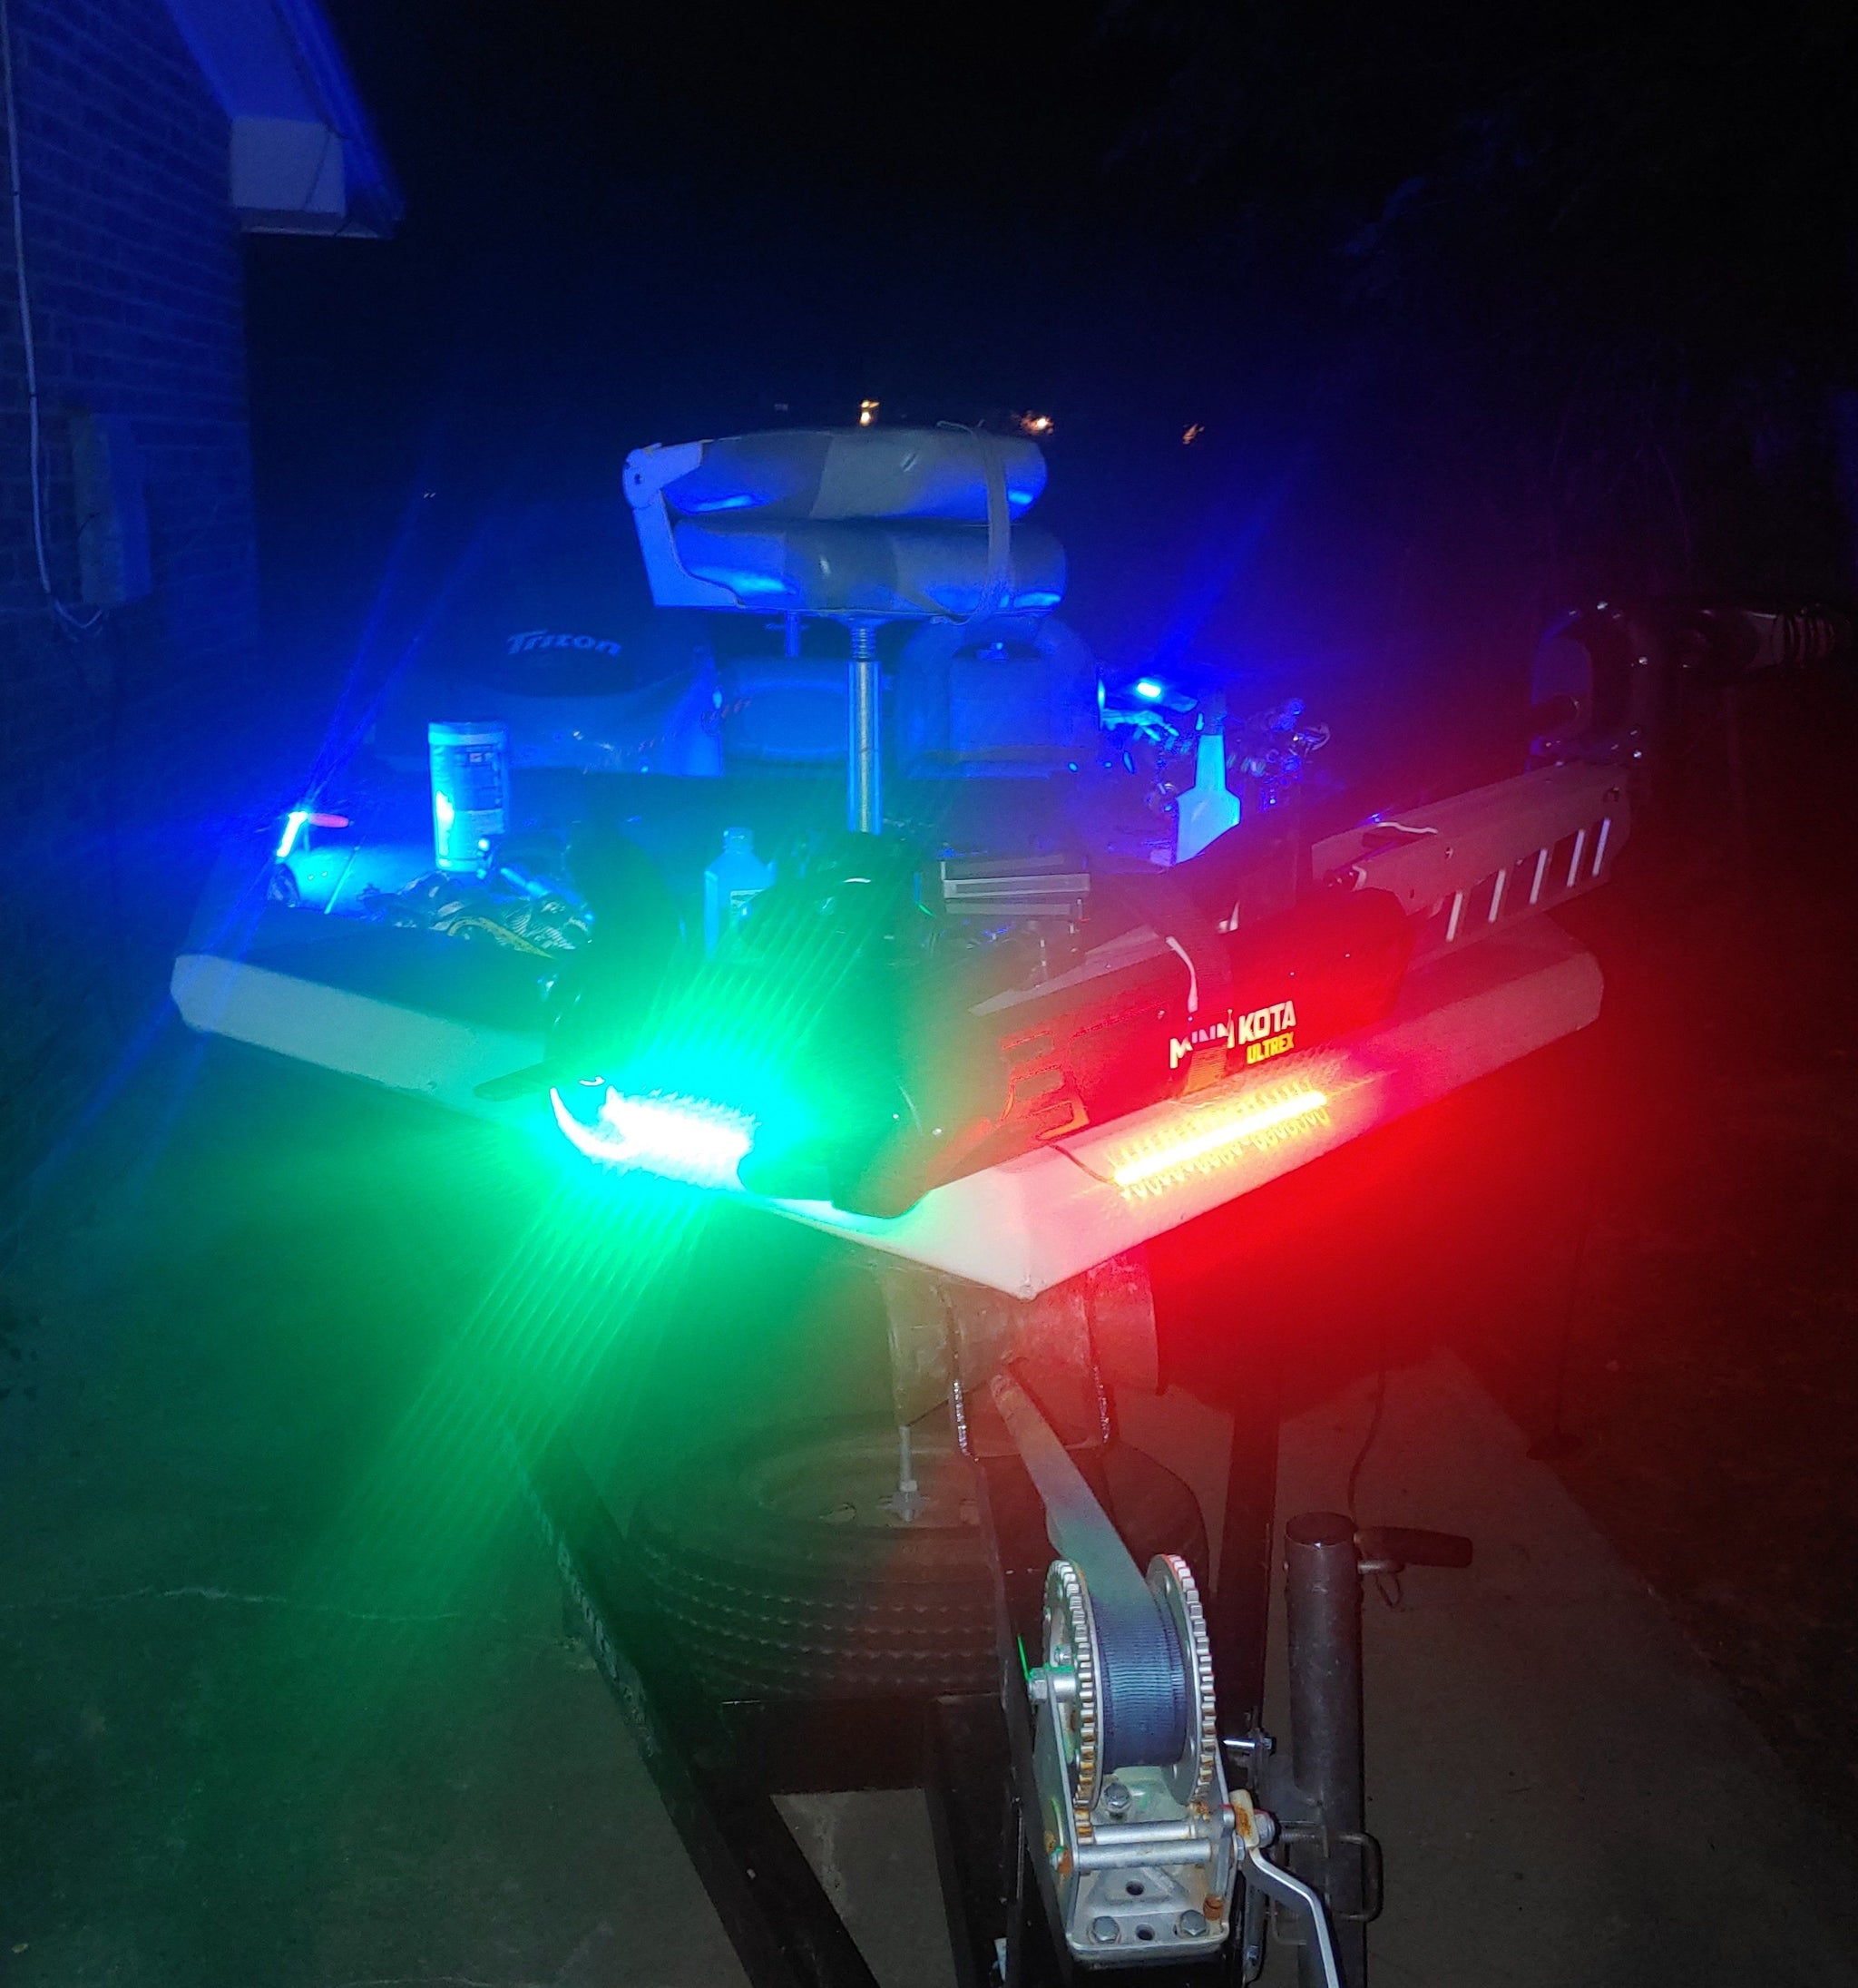 Boaton Boat Navigation Lights, Super Bright Boat Bow Lights Night